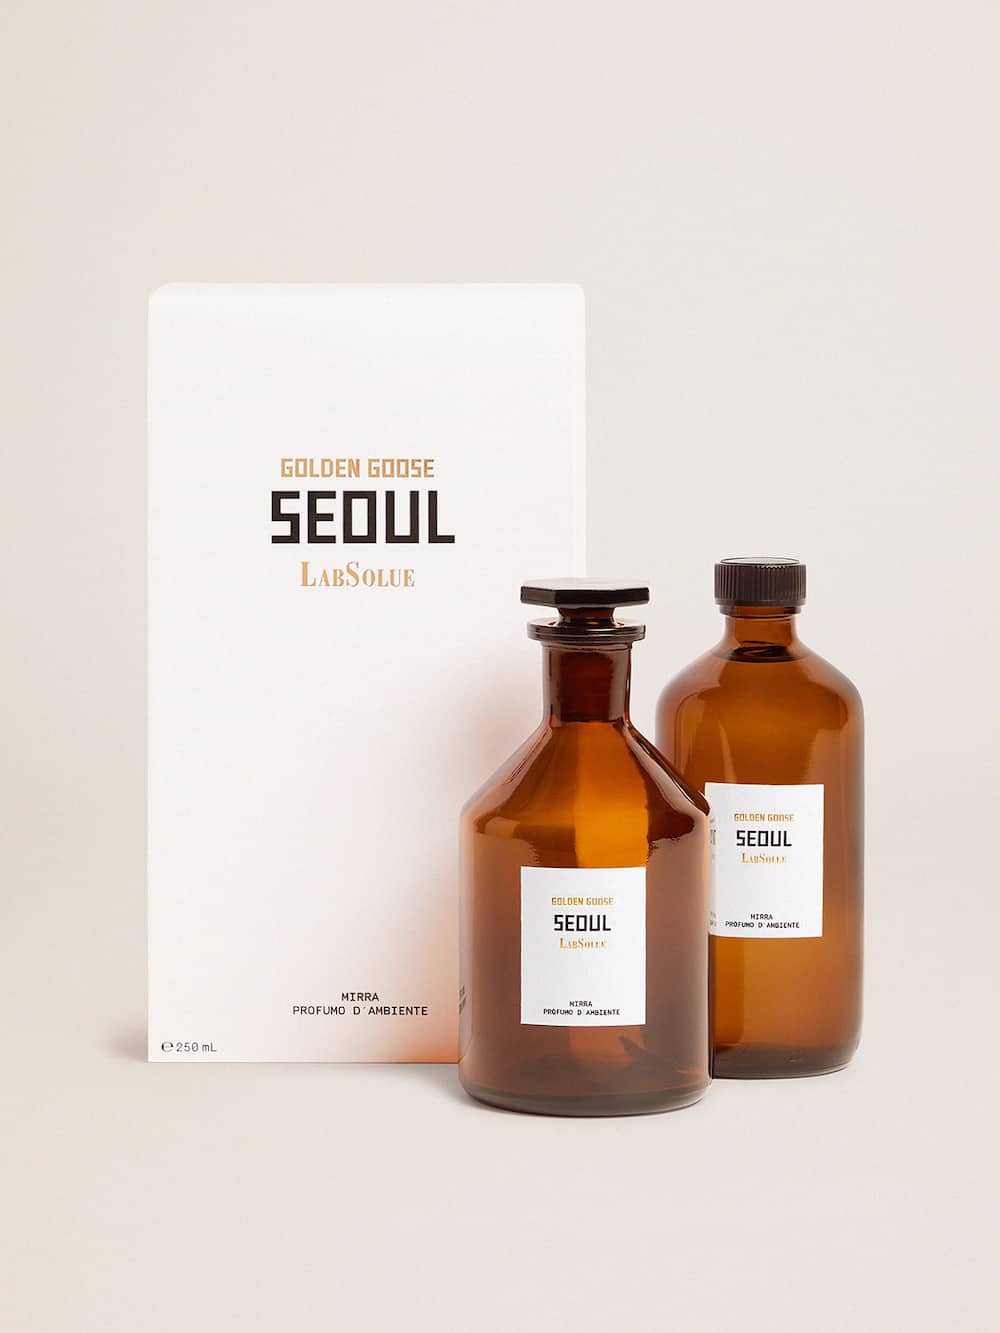 Golden Goose - Seoul Essence Mirra Ambientador 250 ml in 